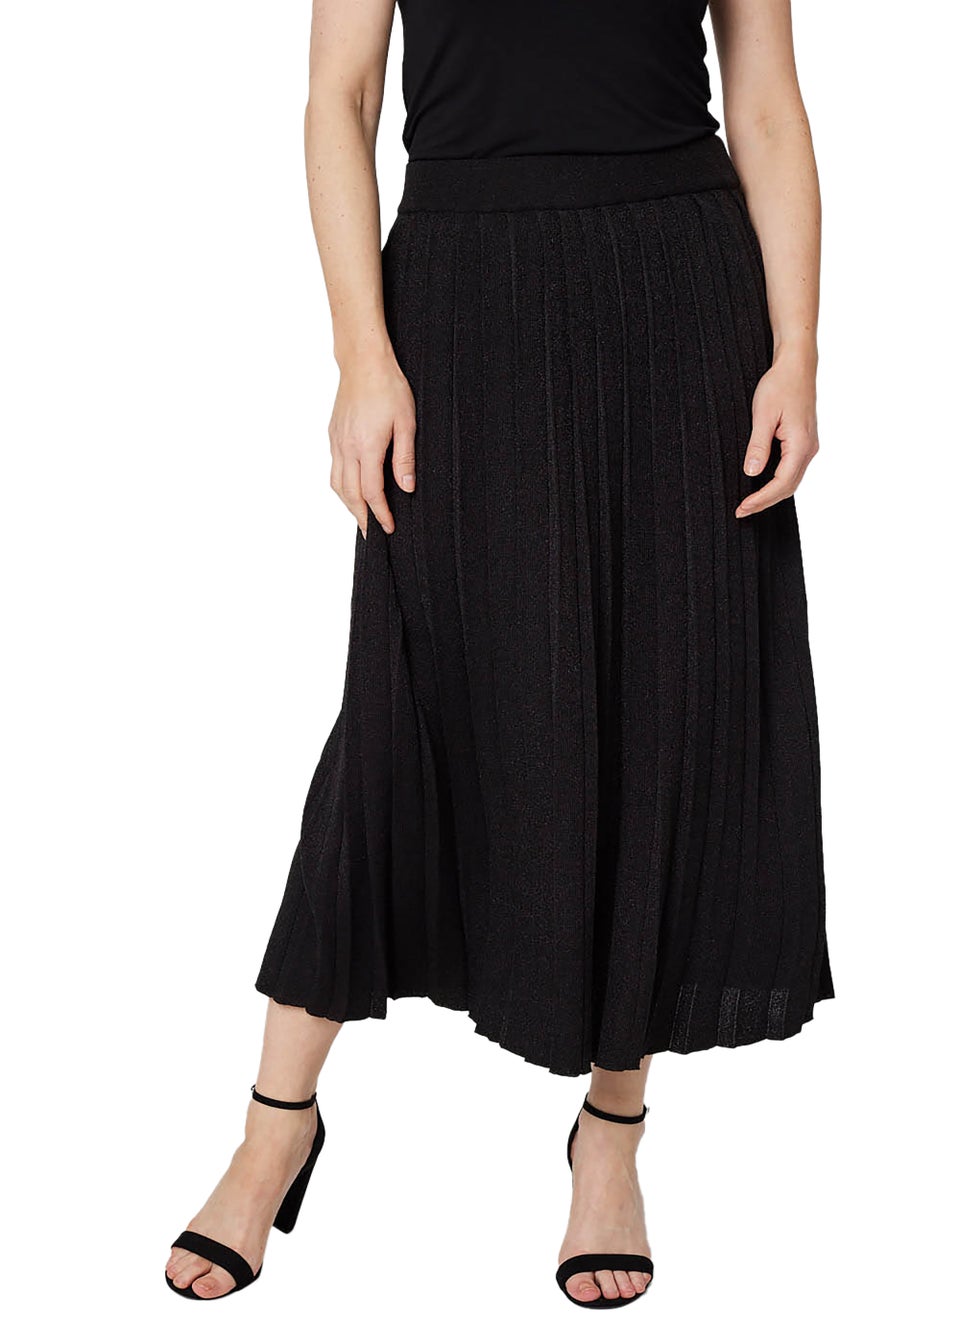 Izabel London Black High Waist Pleated Knit Skirt - Matalan